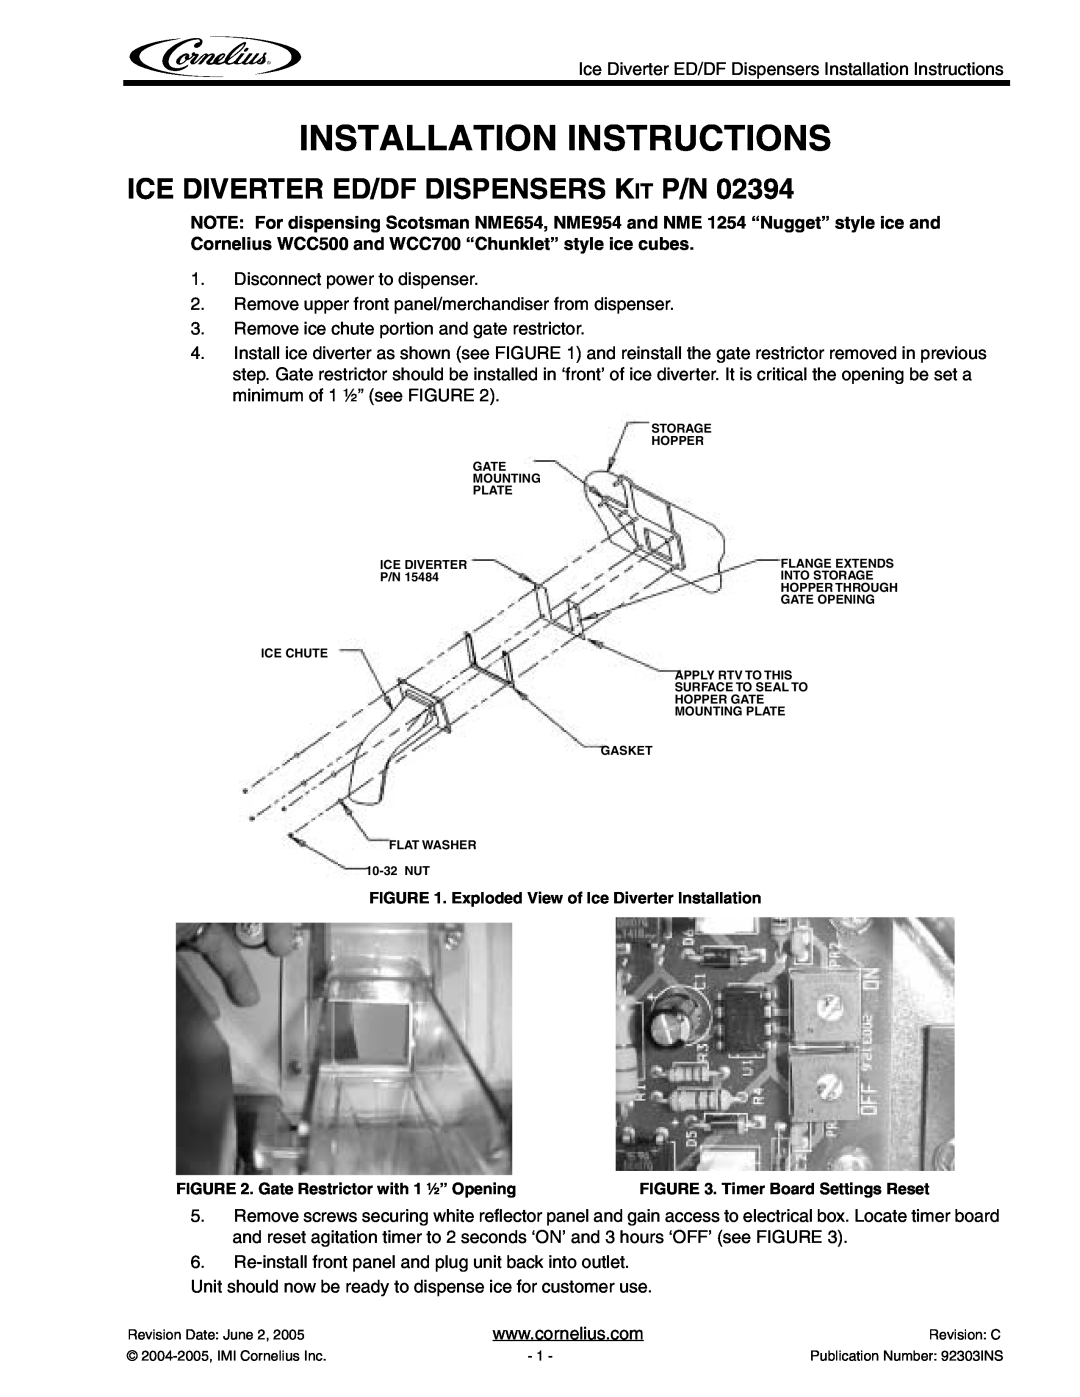 Cornelius DF150, DF175, DF200 installation instructions Installation Instructions, Ice Diverter Ed/Df Dispensers Kit P/N 